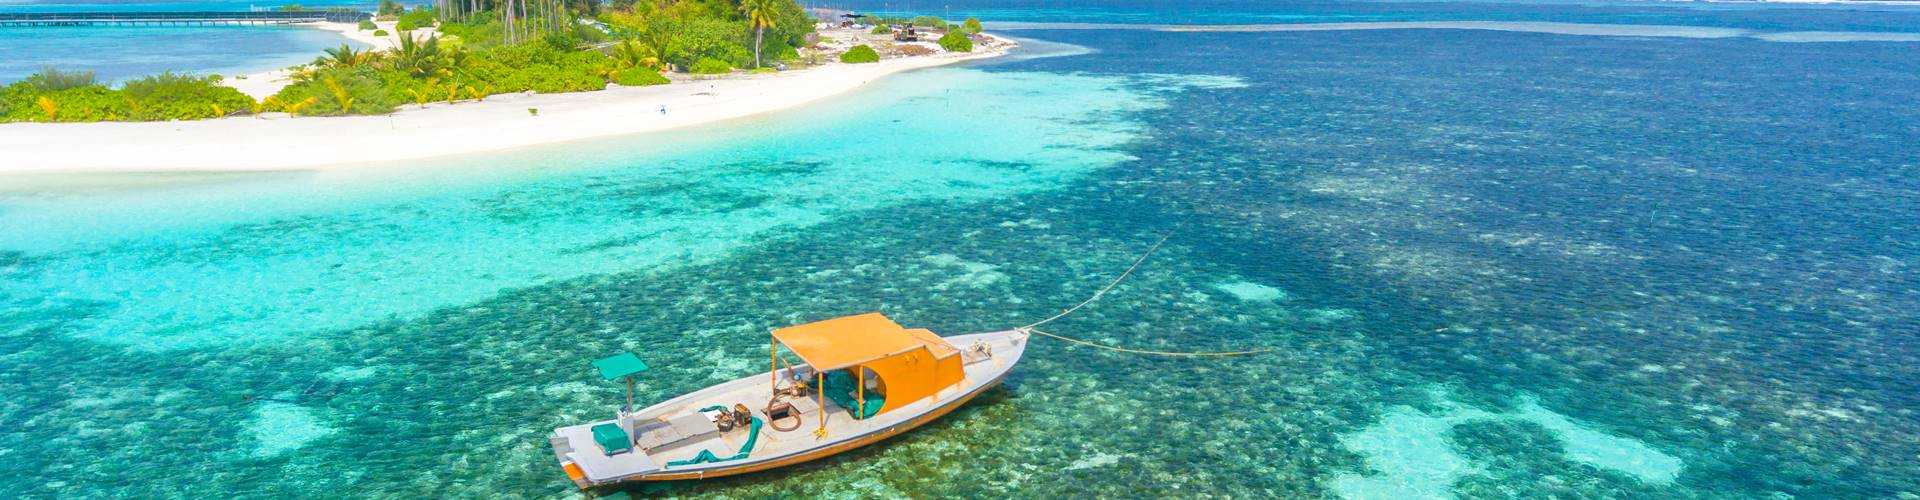 Olhuveli island in Maldives